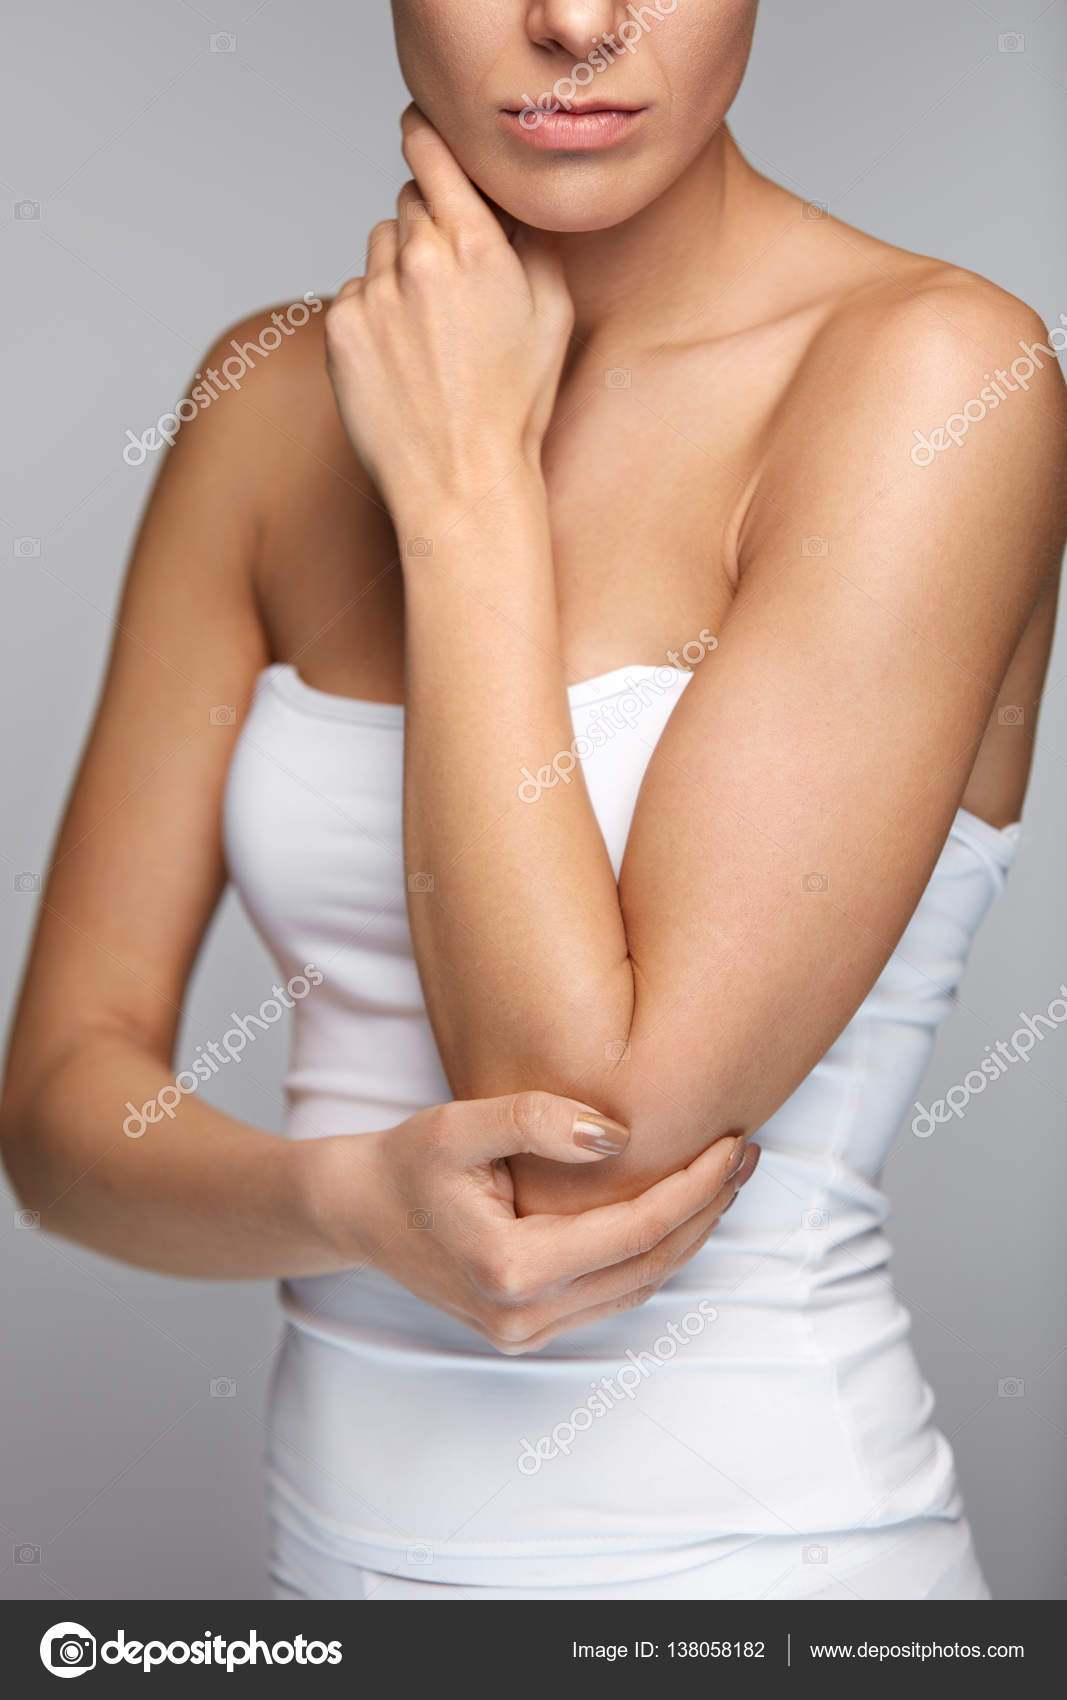 https://st3.depositphotos.com/1441511/13805/i/1600/depositphotos_138058182-stock-photo-elbow-pain-closeup-beautiful-female.jpg